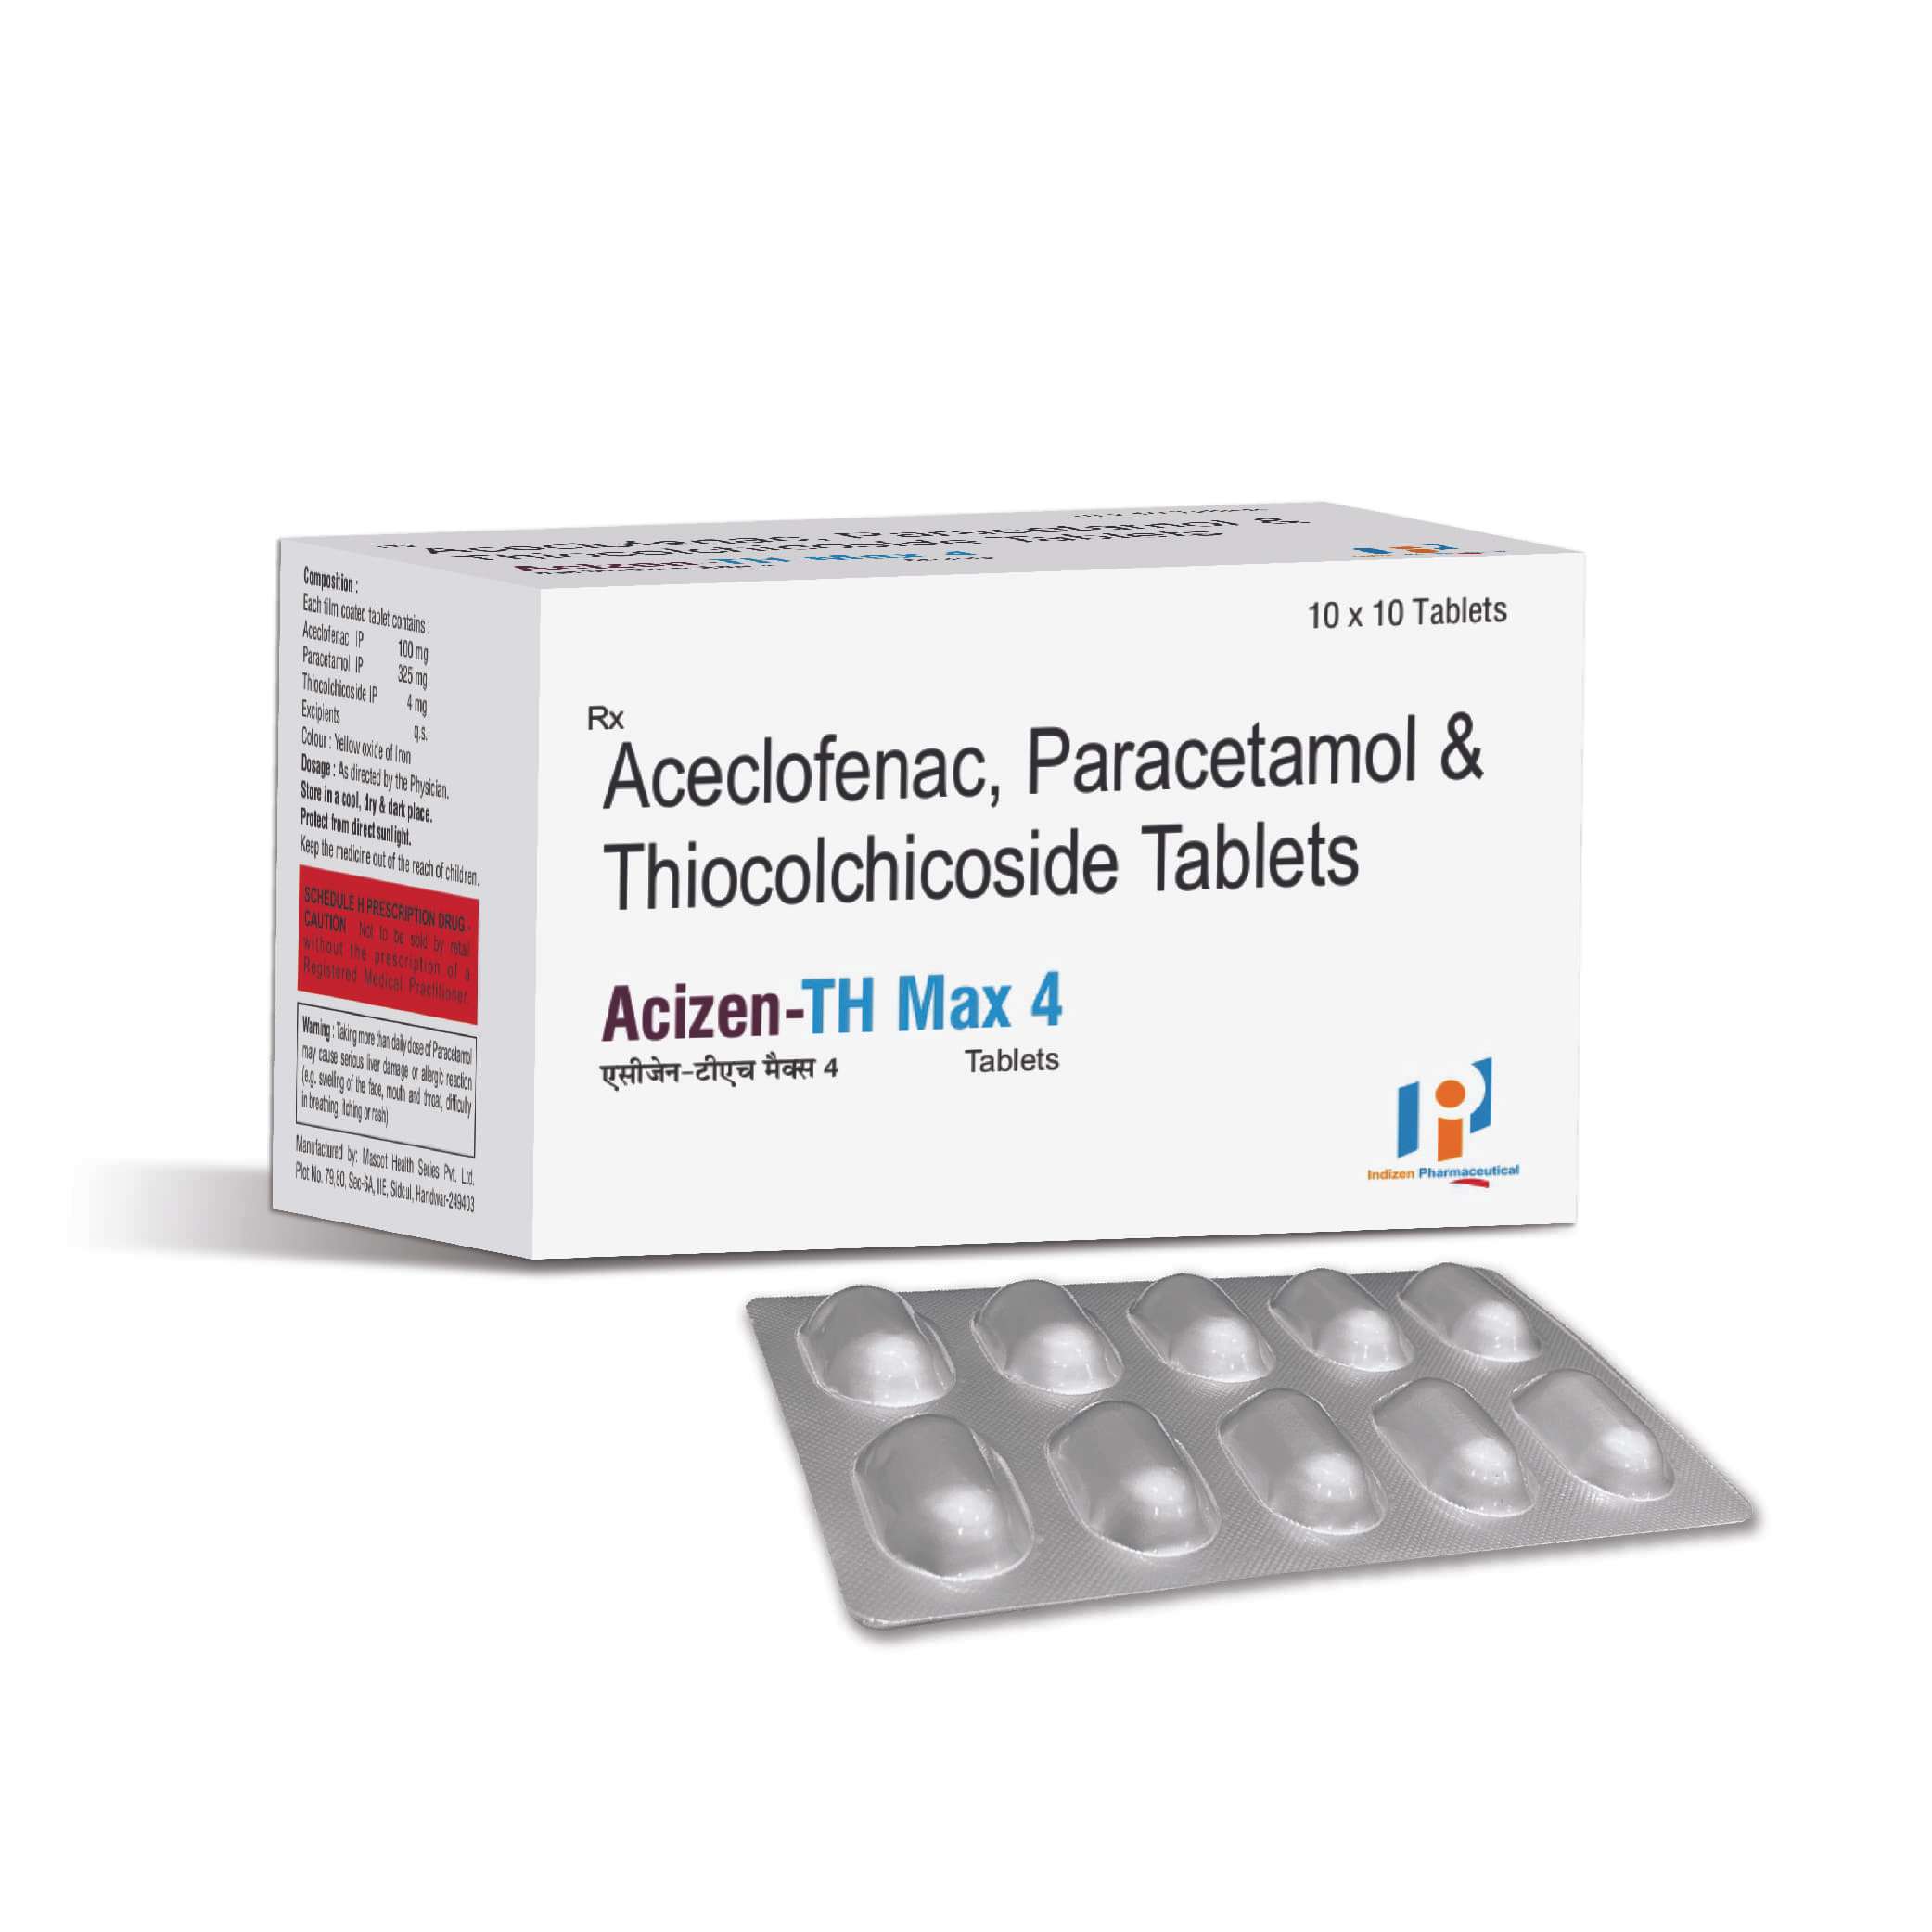 aceclofenac 100 mg + thiocolchicoside 4 mg + paracetamol 325 mg